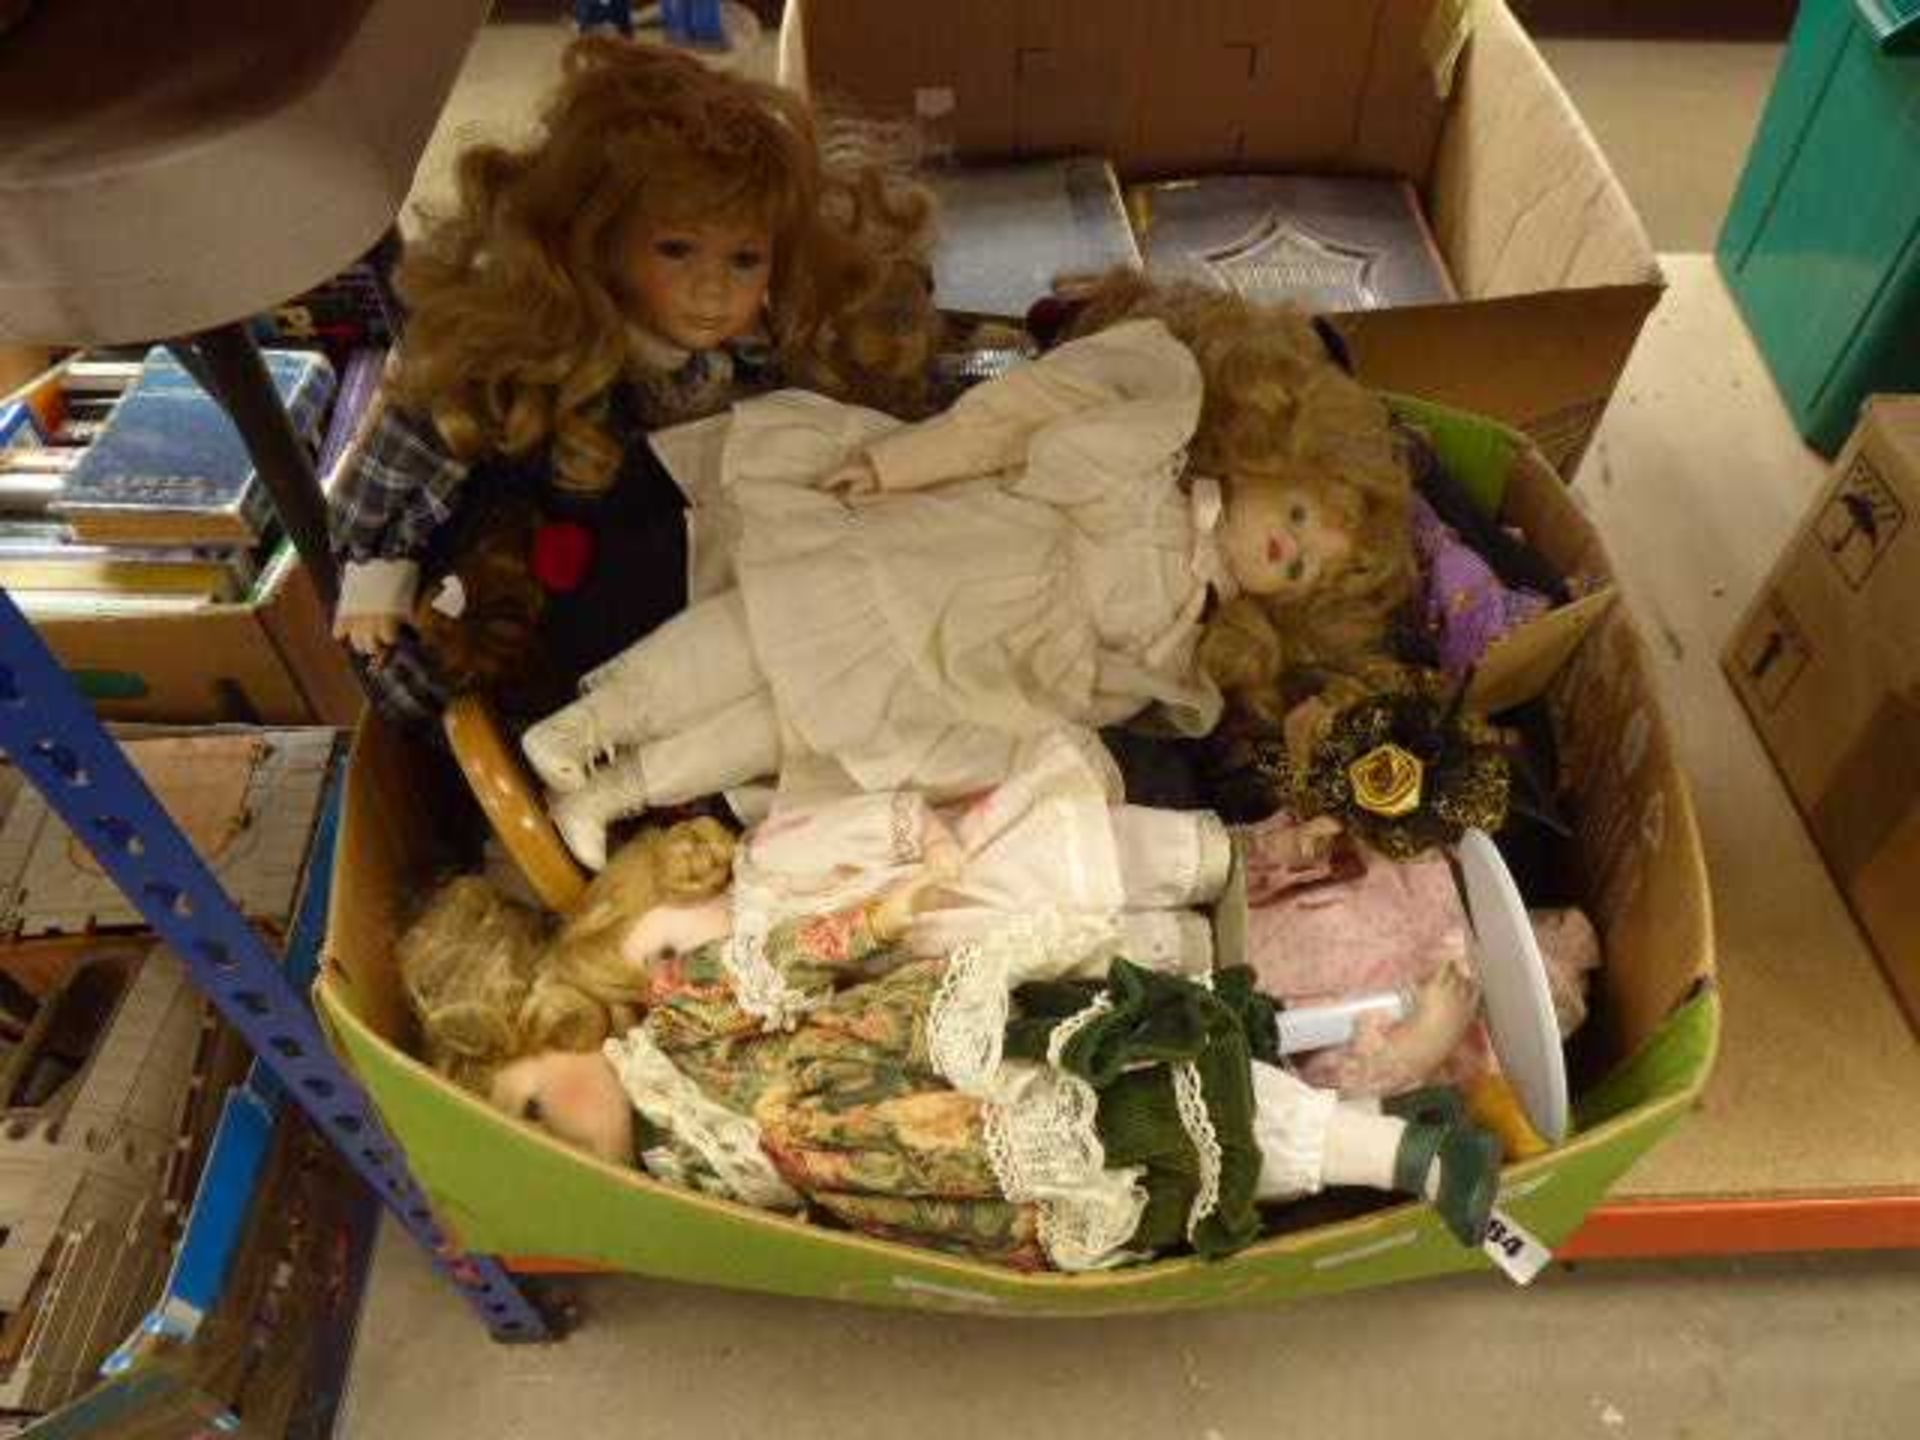 Box containing dolls